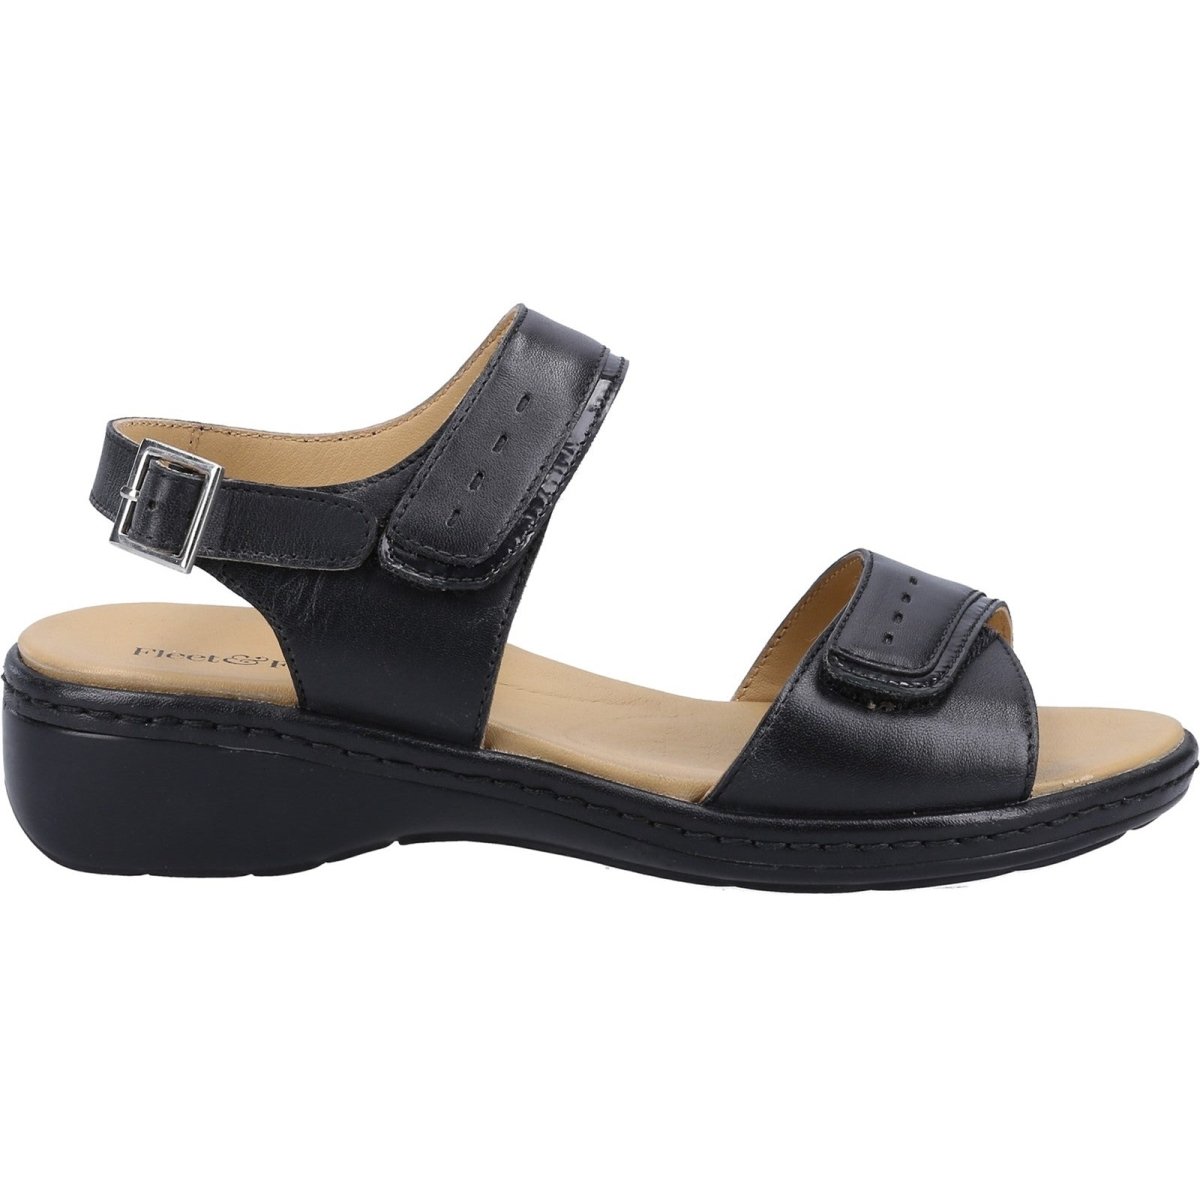 Fleet & Foster Linda Ladies Leather Summer Sandals - Shoe Store Direct